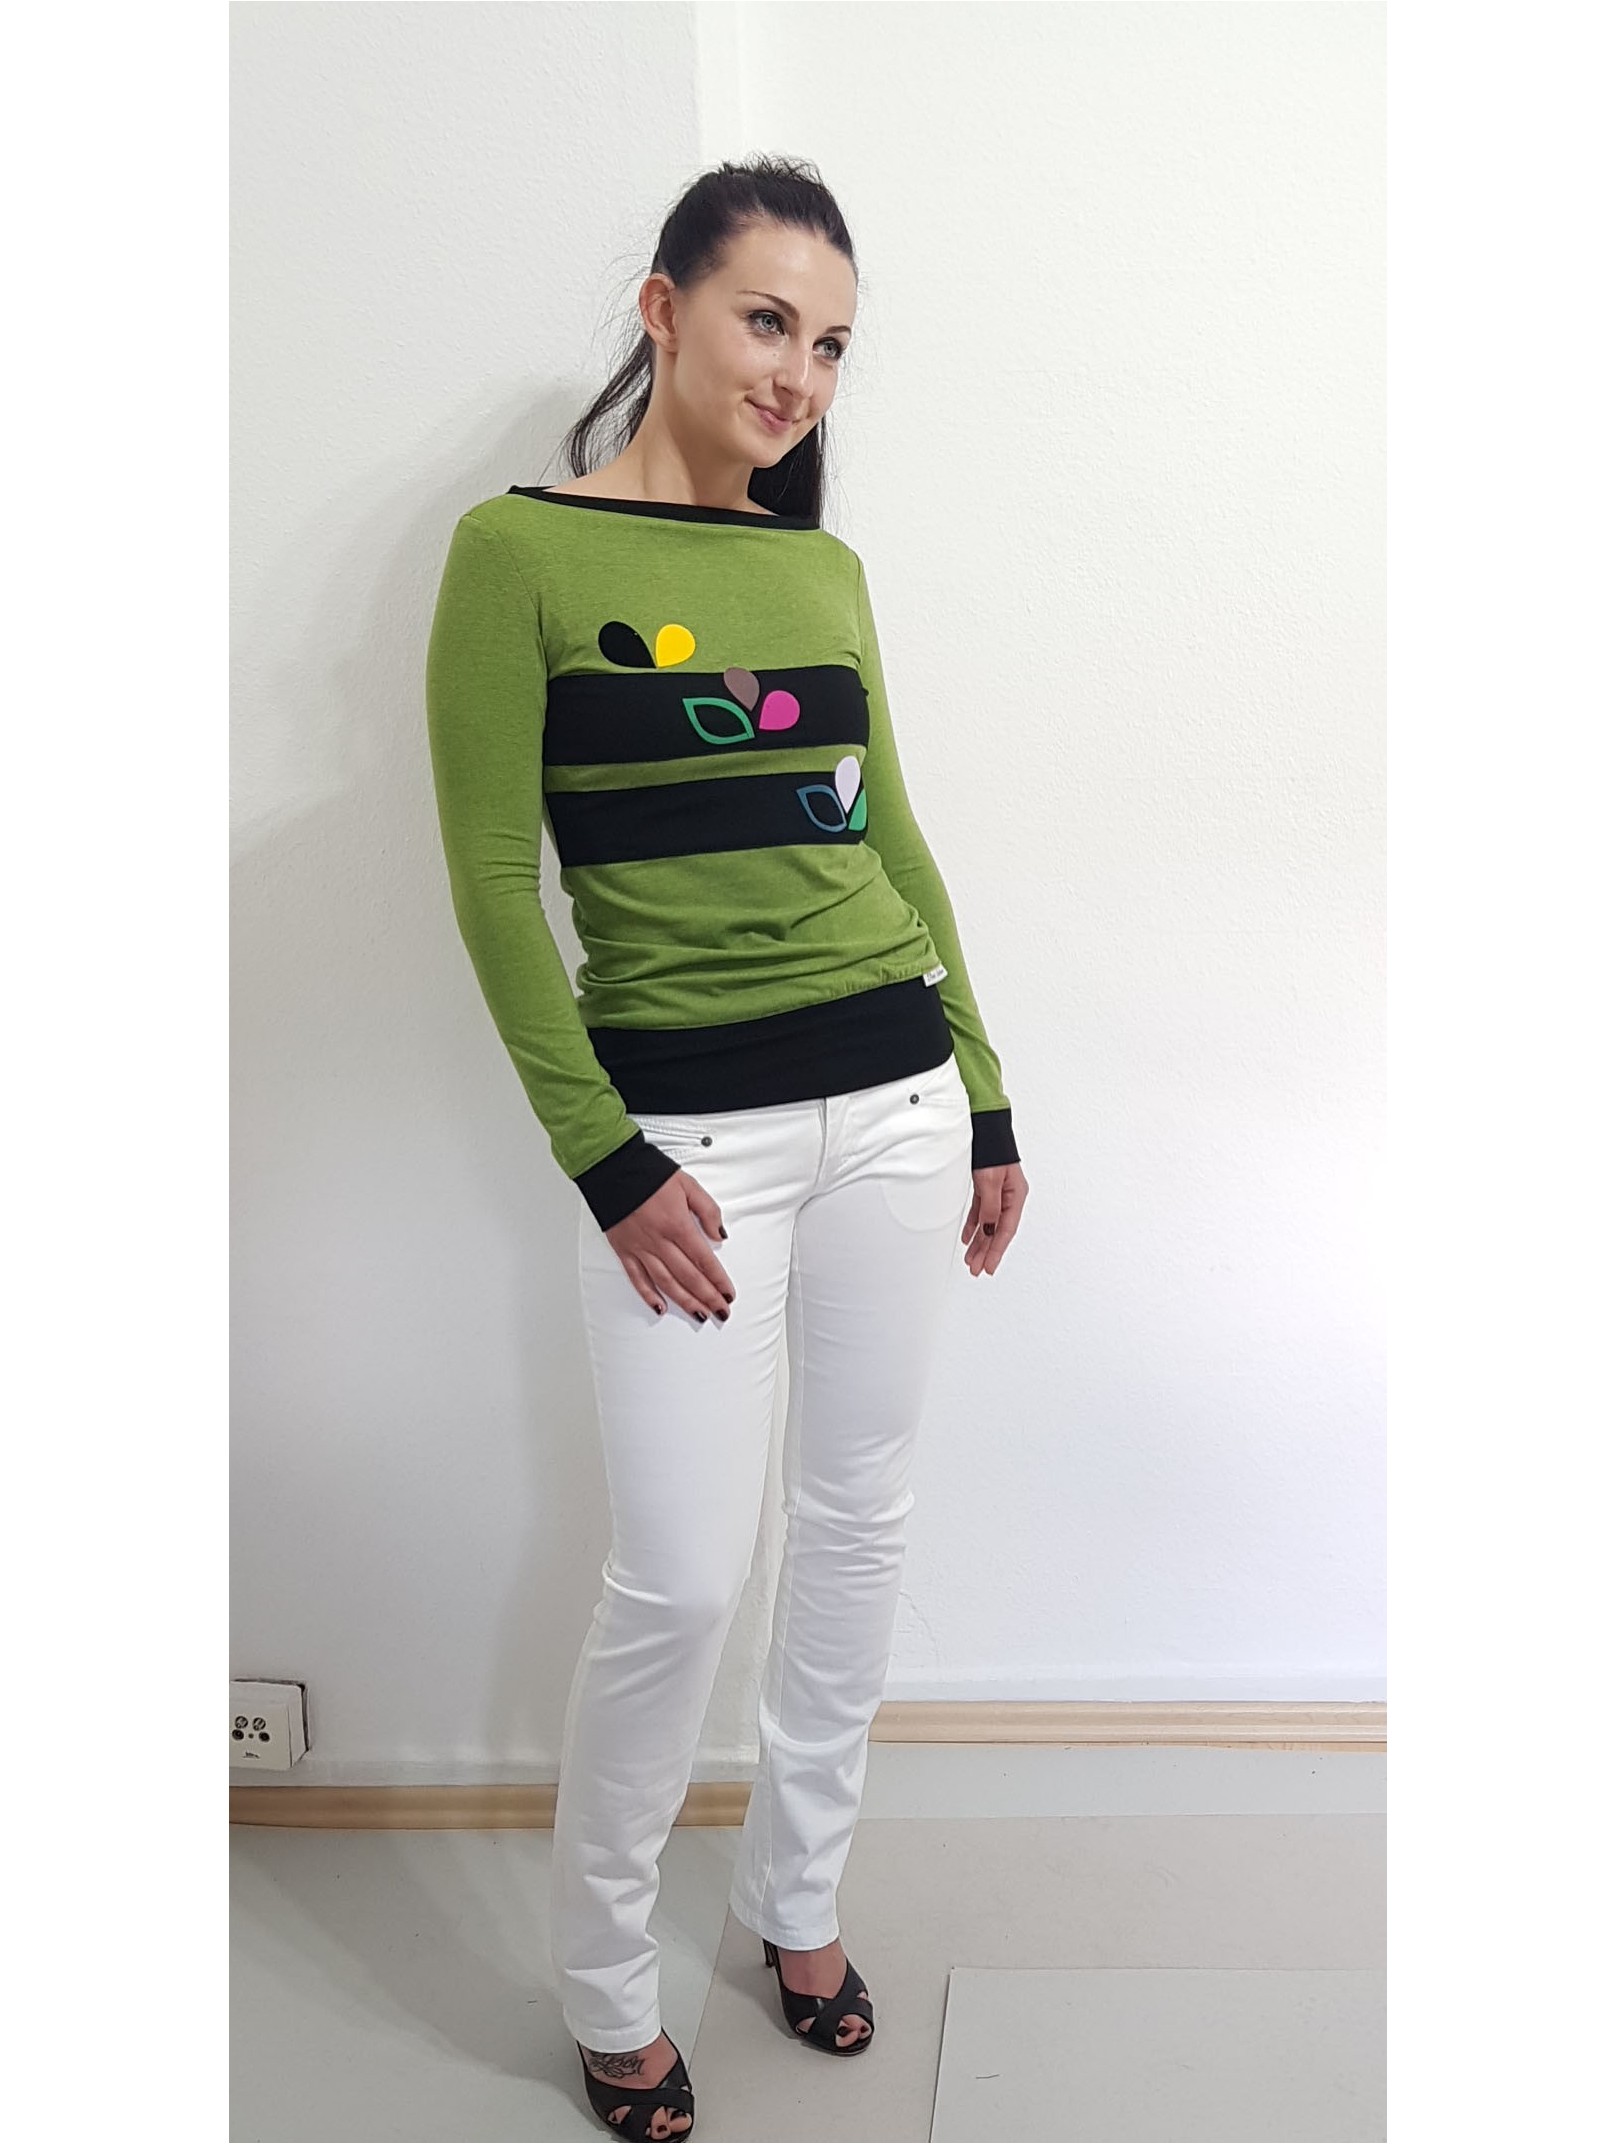 Iza Fabian, Pullover mit retro Muster, Kiwi grün, schwarz, Multicolor, Damen, Designer Mode.